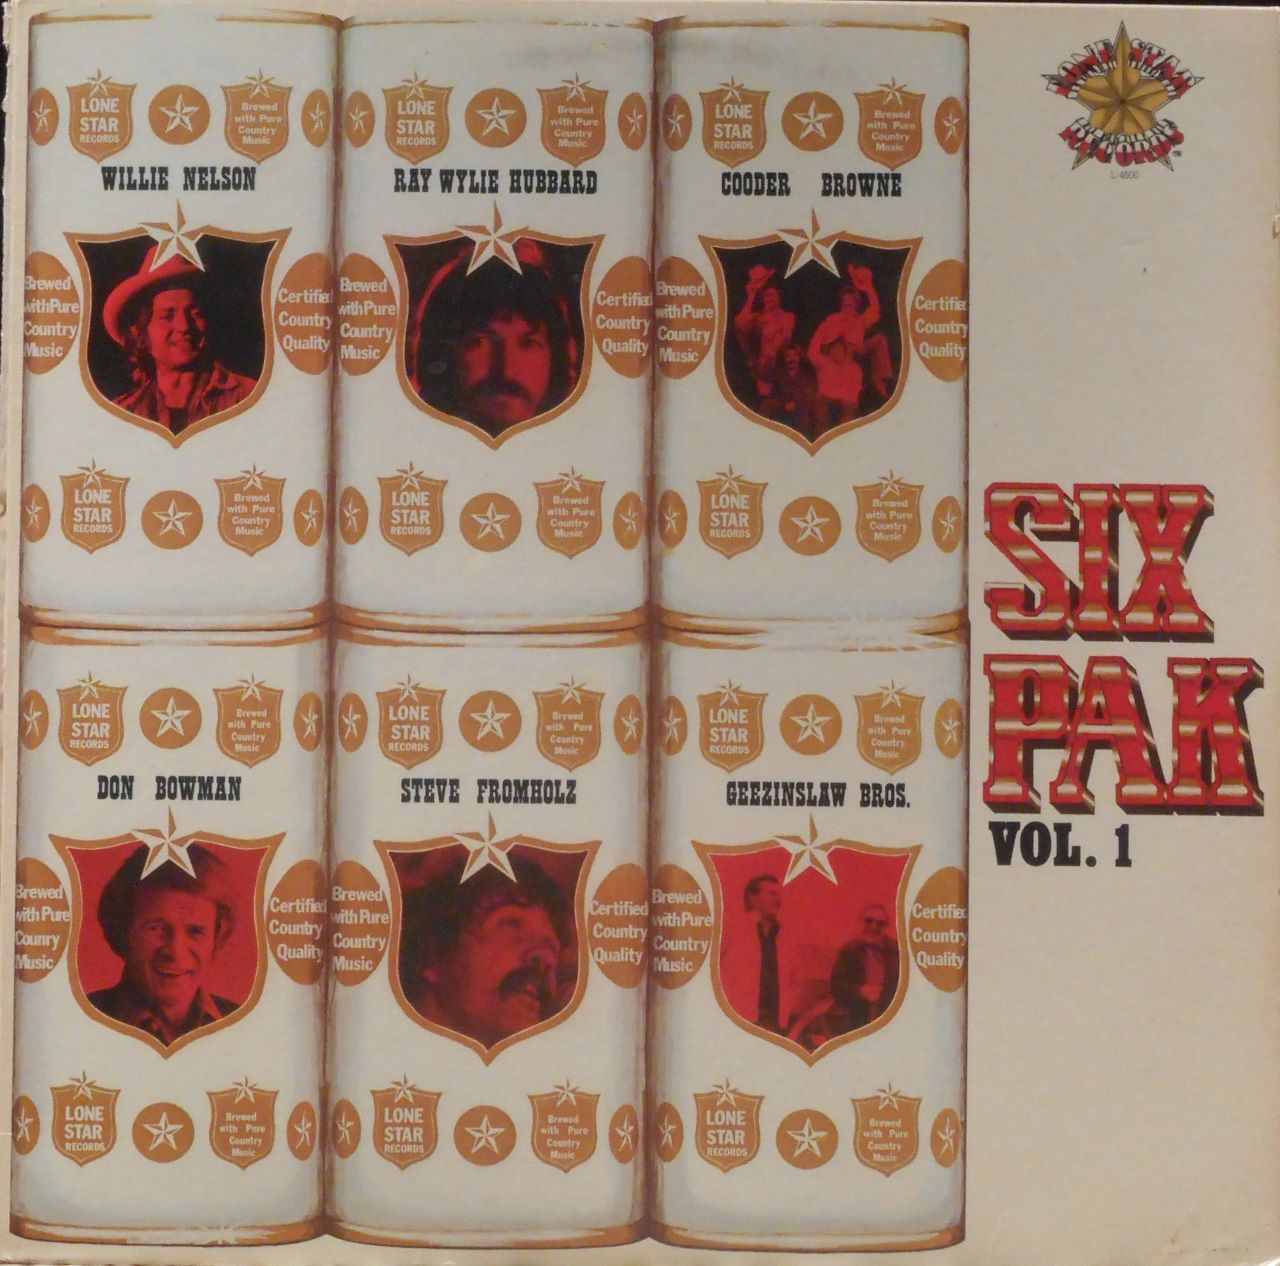 A.A.V.V. – Six Pack, Vol. 1 Lone Star cover album